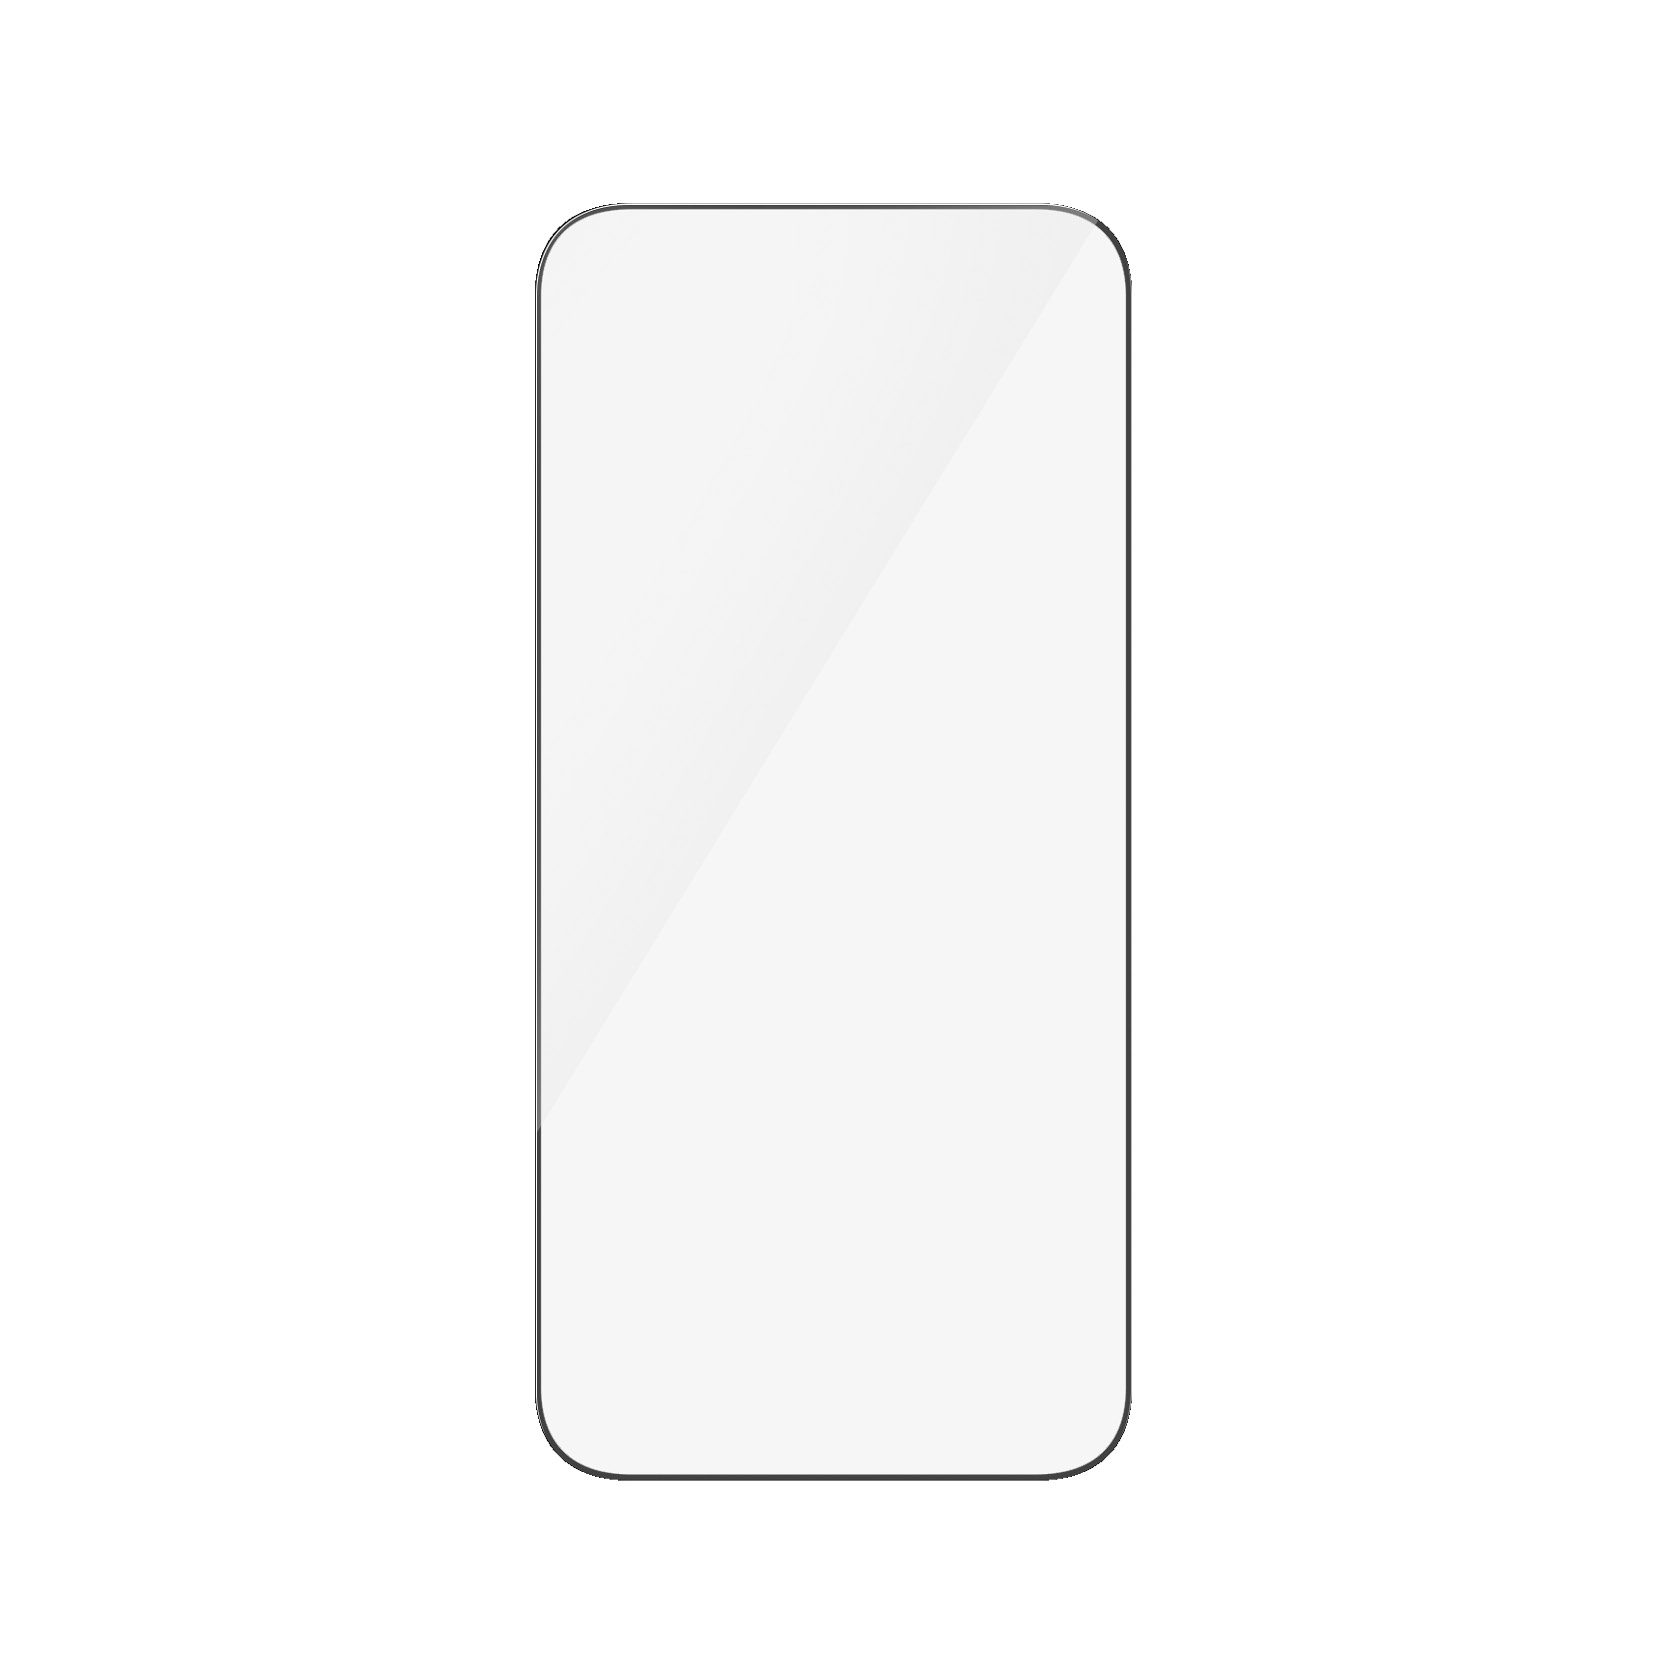 PANZER GLASS Ultra-Wide Fit iPhone 15 Pro Max kijelzővédő üvegfólia applikátorral